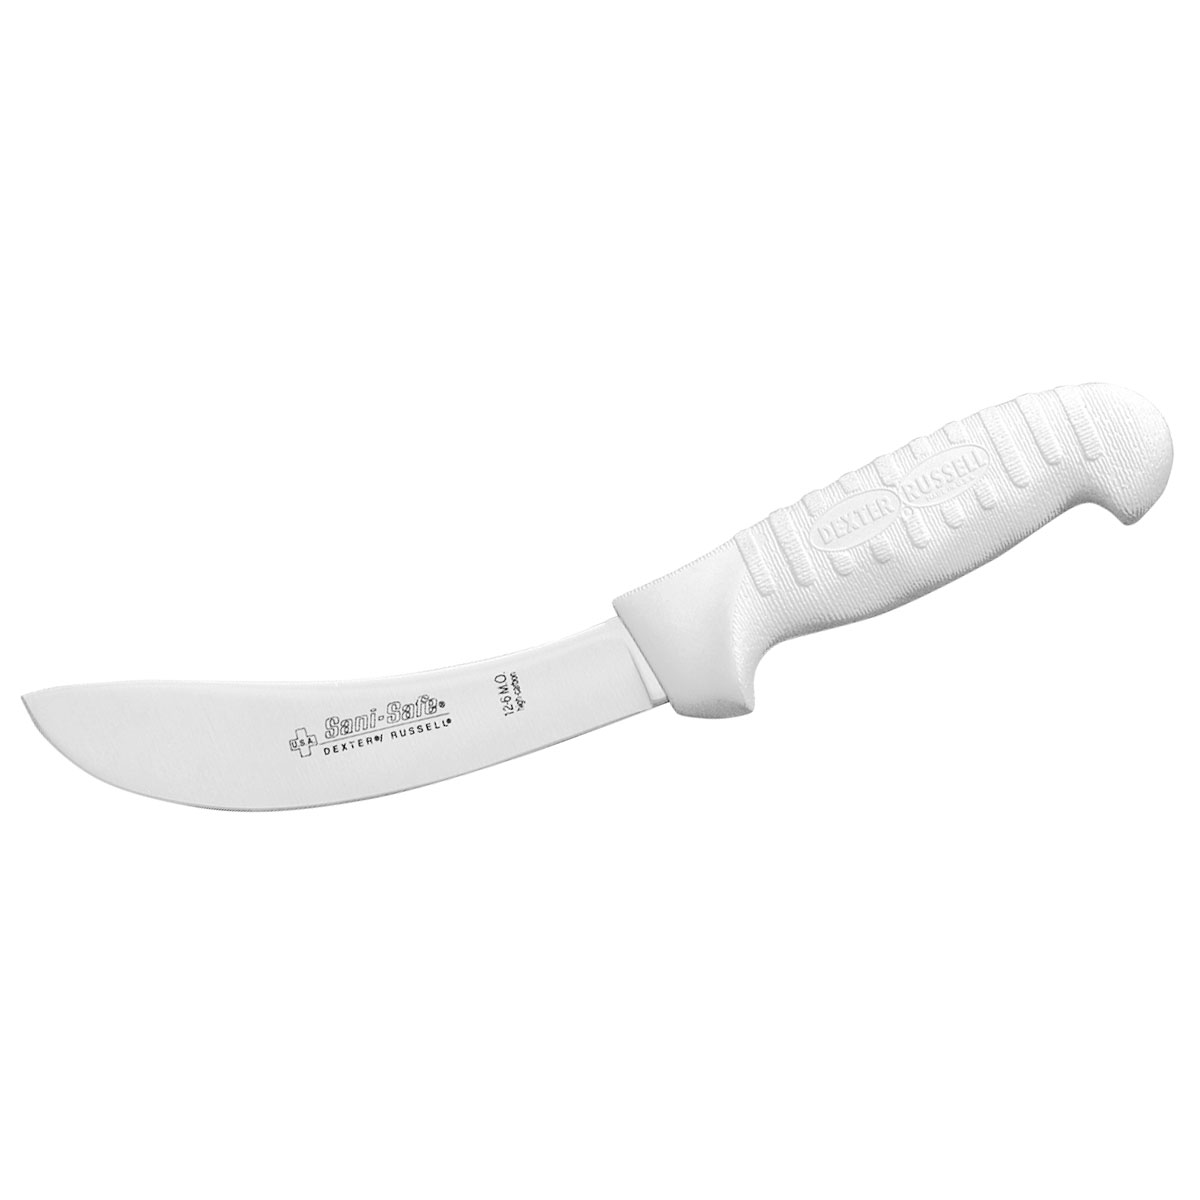 Dexter Skinning Knife, 6” Inch (15cm) CarbonSteel